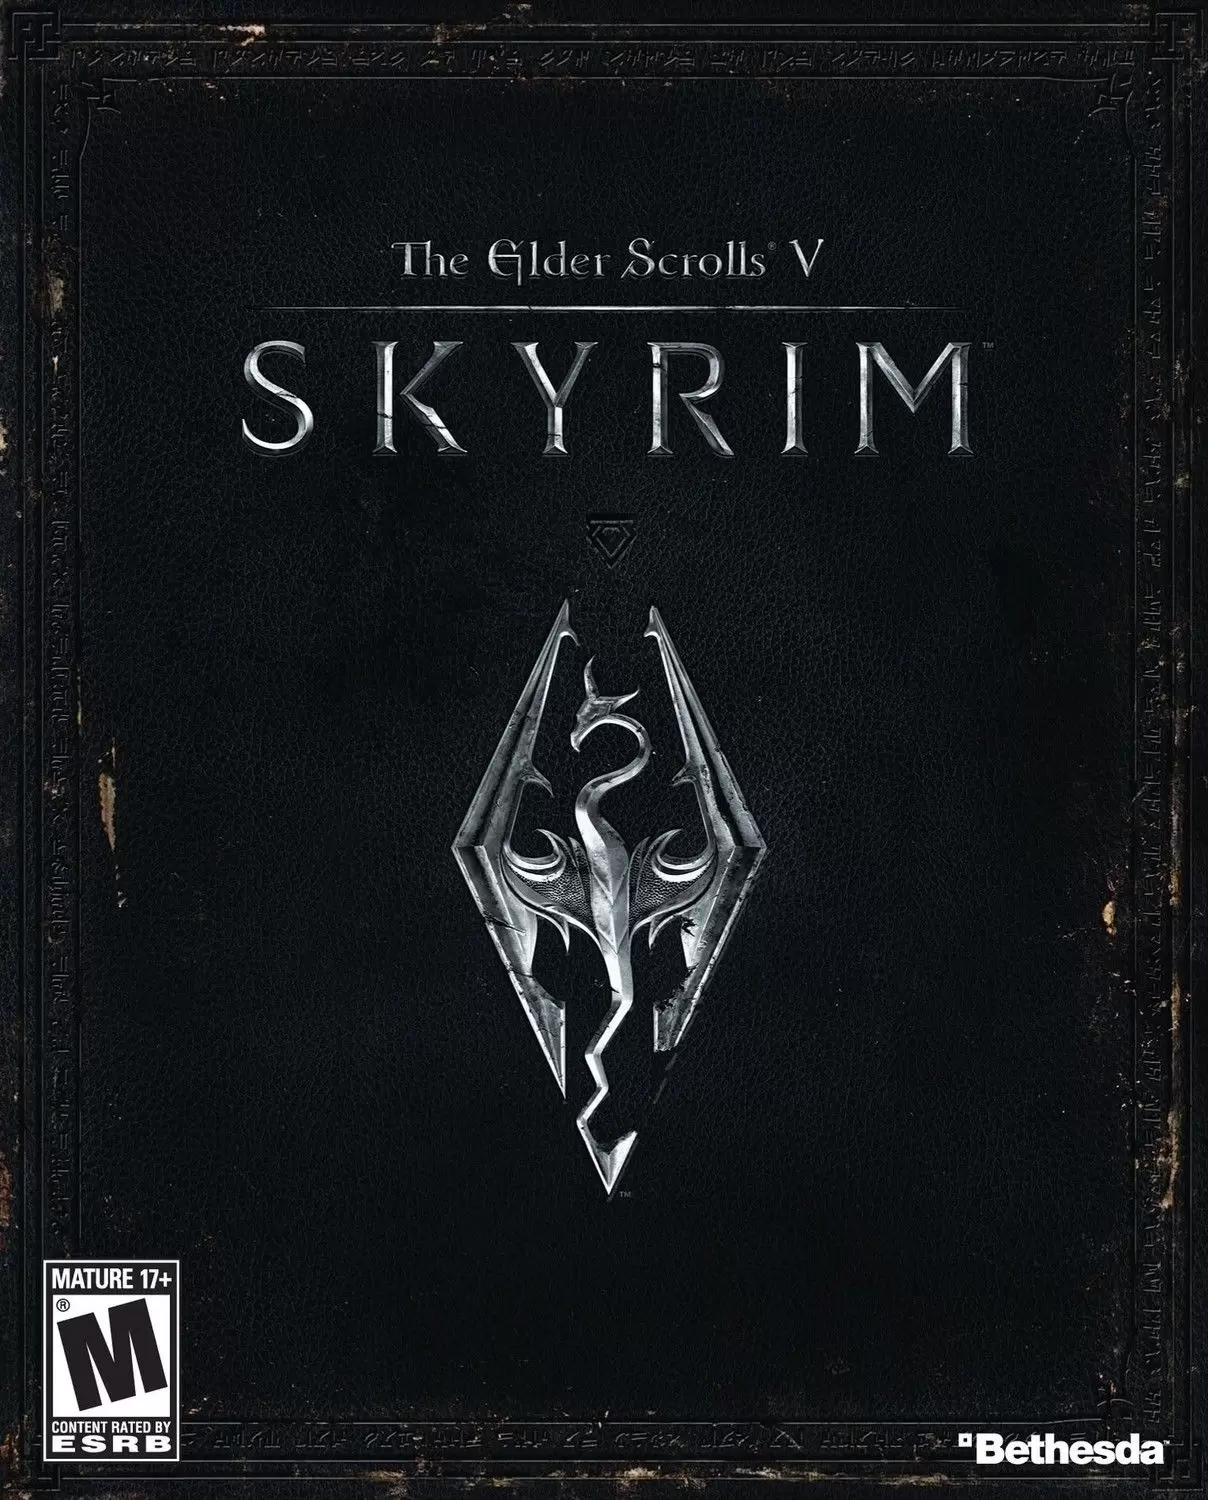 PS3 Games - The Elder Scrolls V: Skyrim